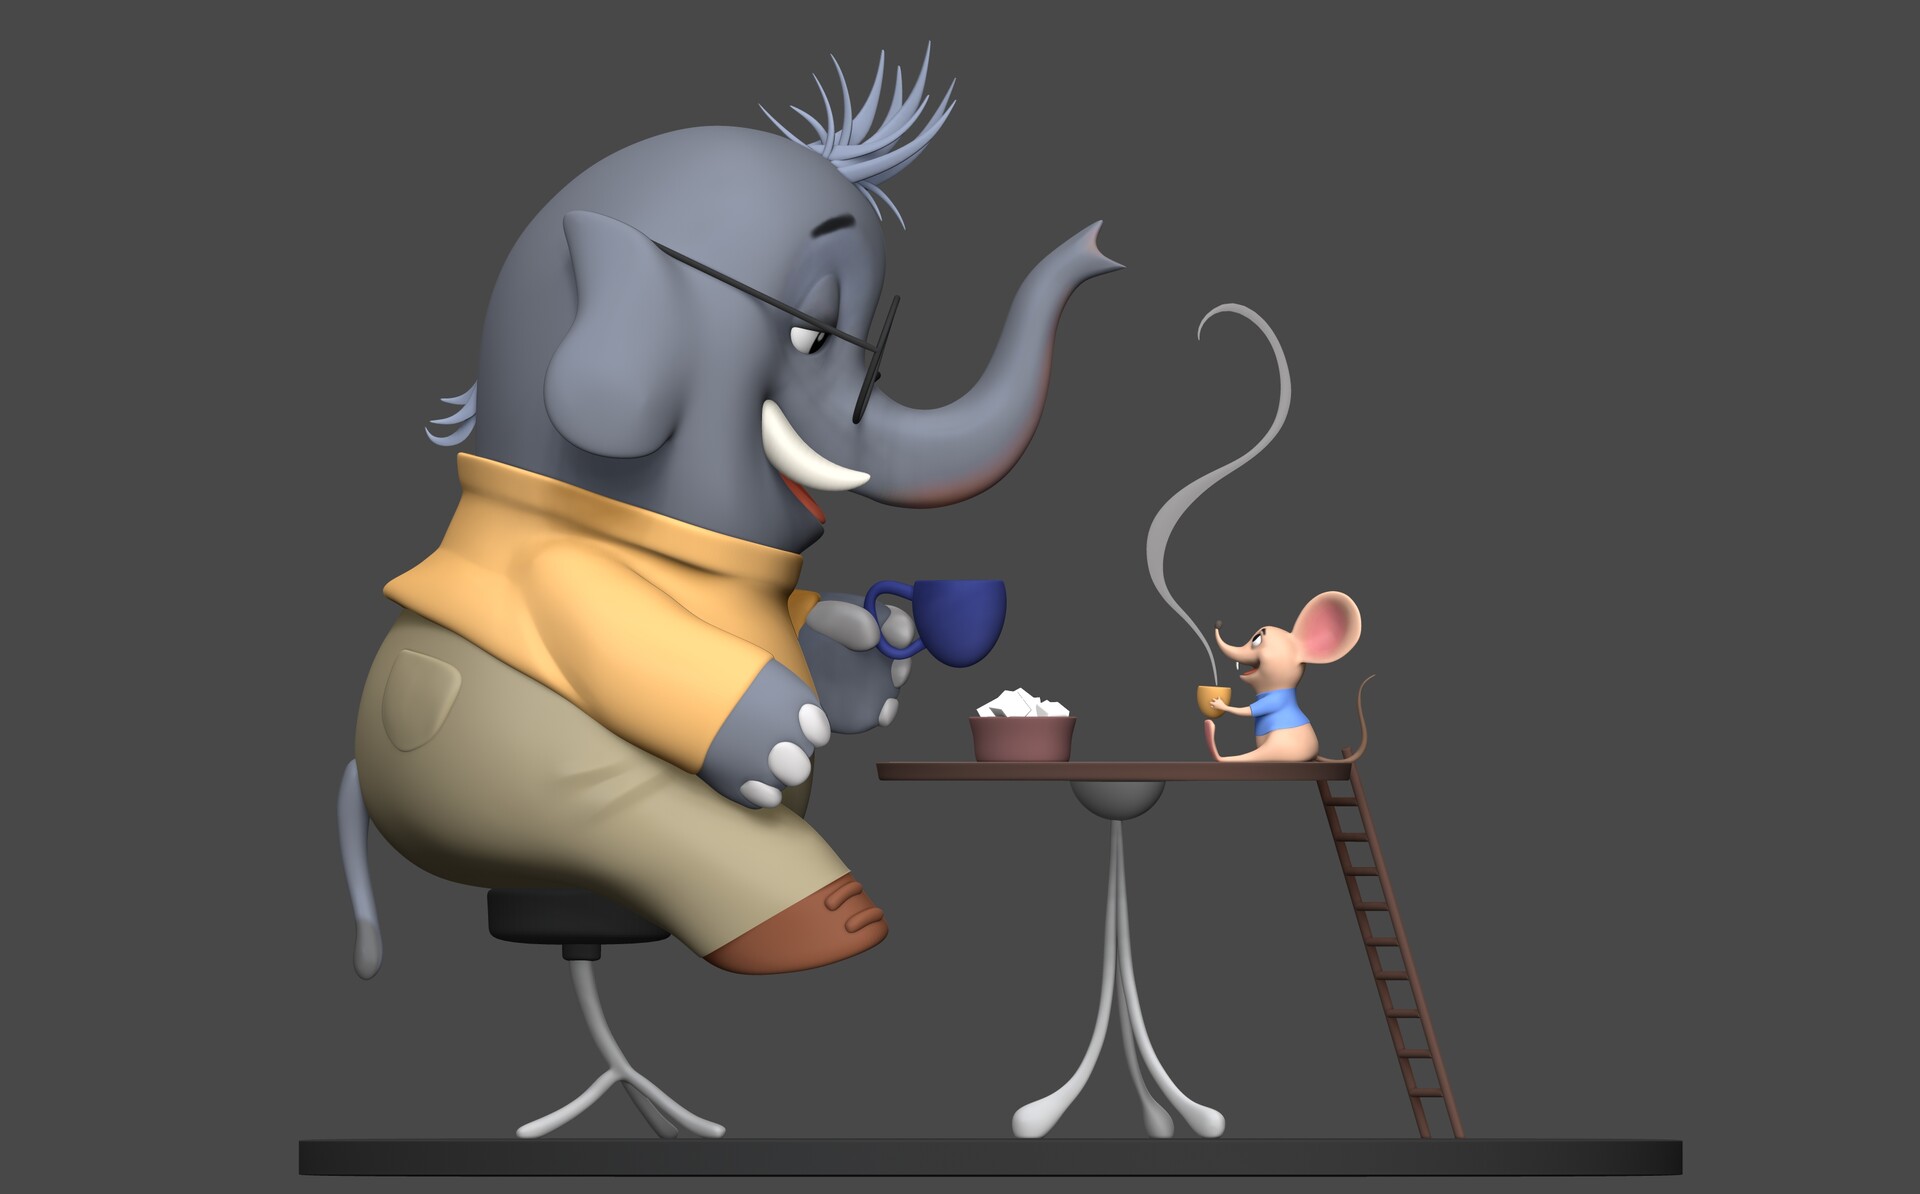 ArtStation - Elephant party